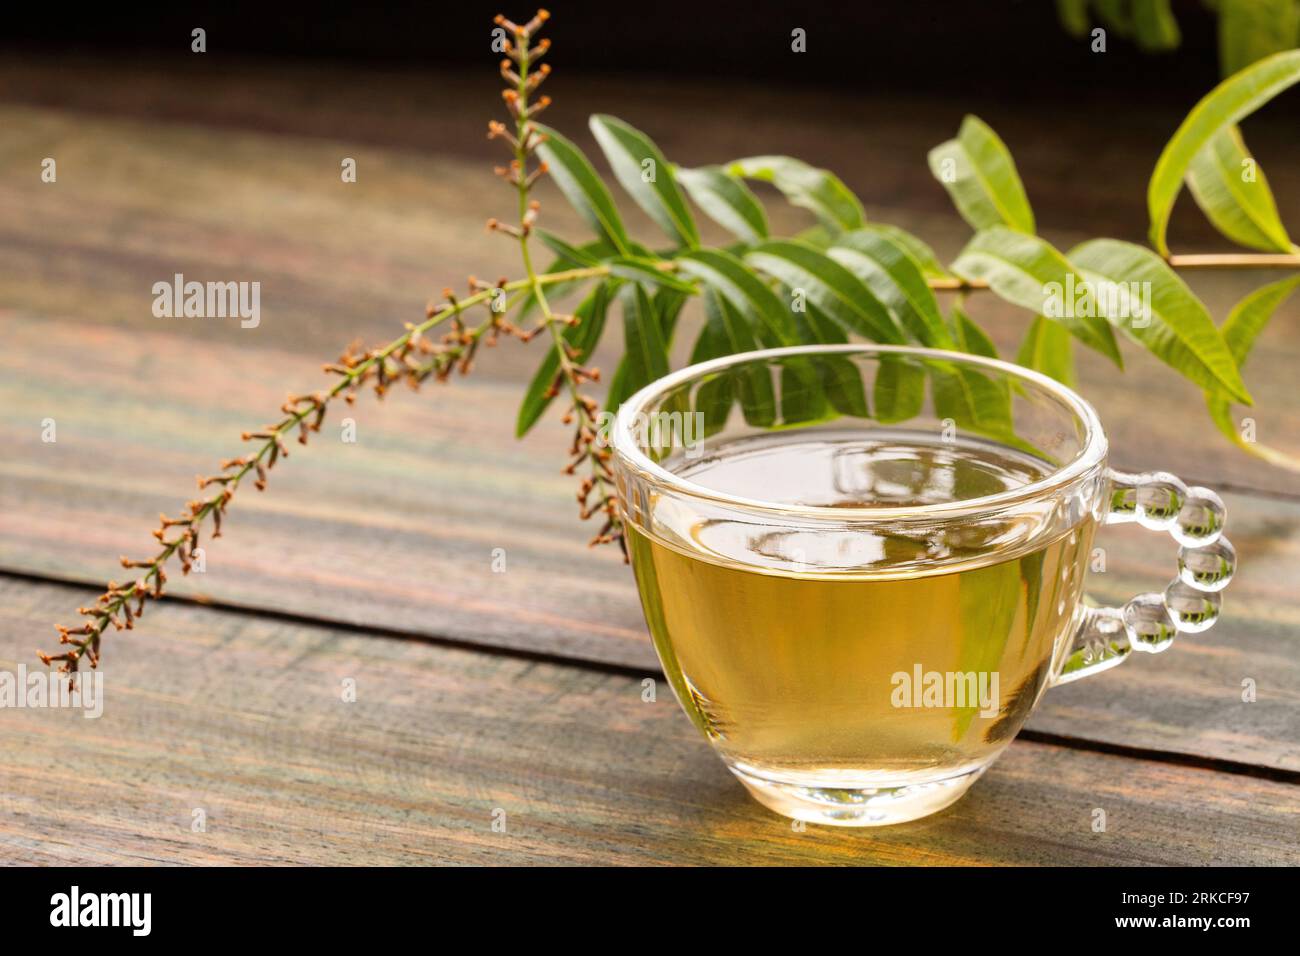 Aloysia citrodora - Lemon verbena hot drink - Organic lemon verbena fresh plant Stock Photo